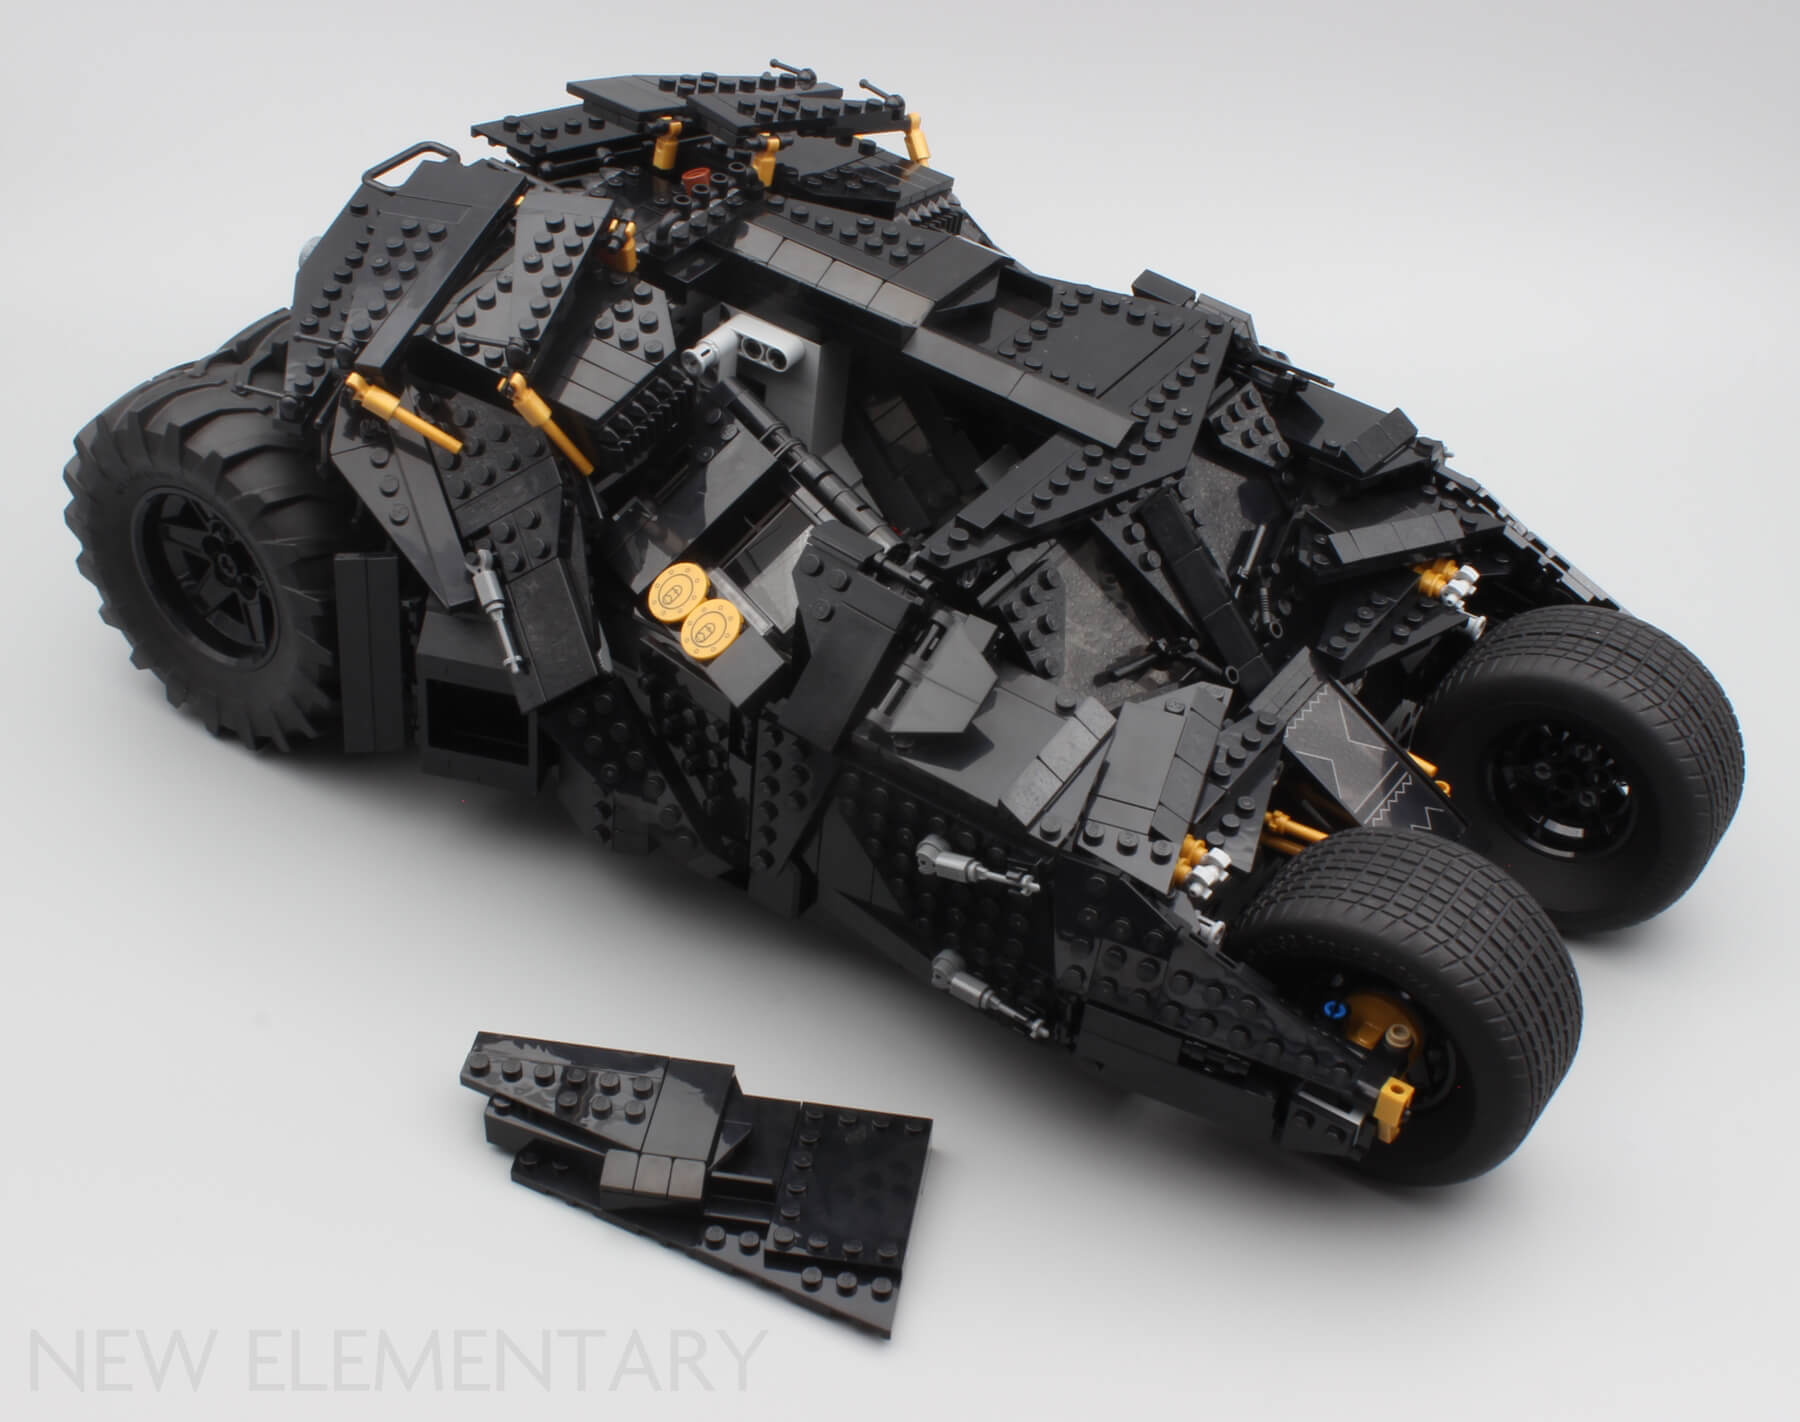 LEGO Super Heroes DC Batmobile Tumbler 76240 Building Set